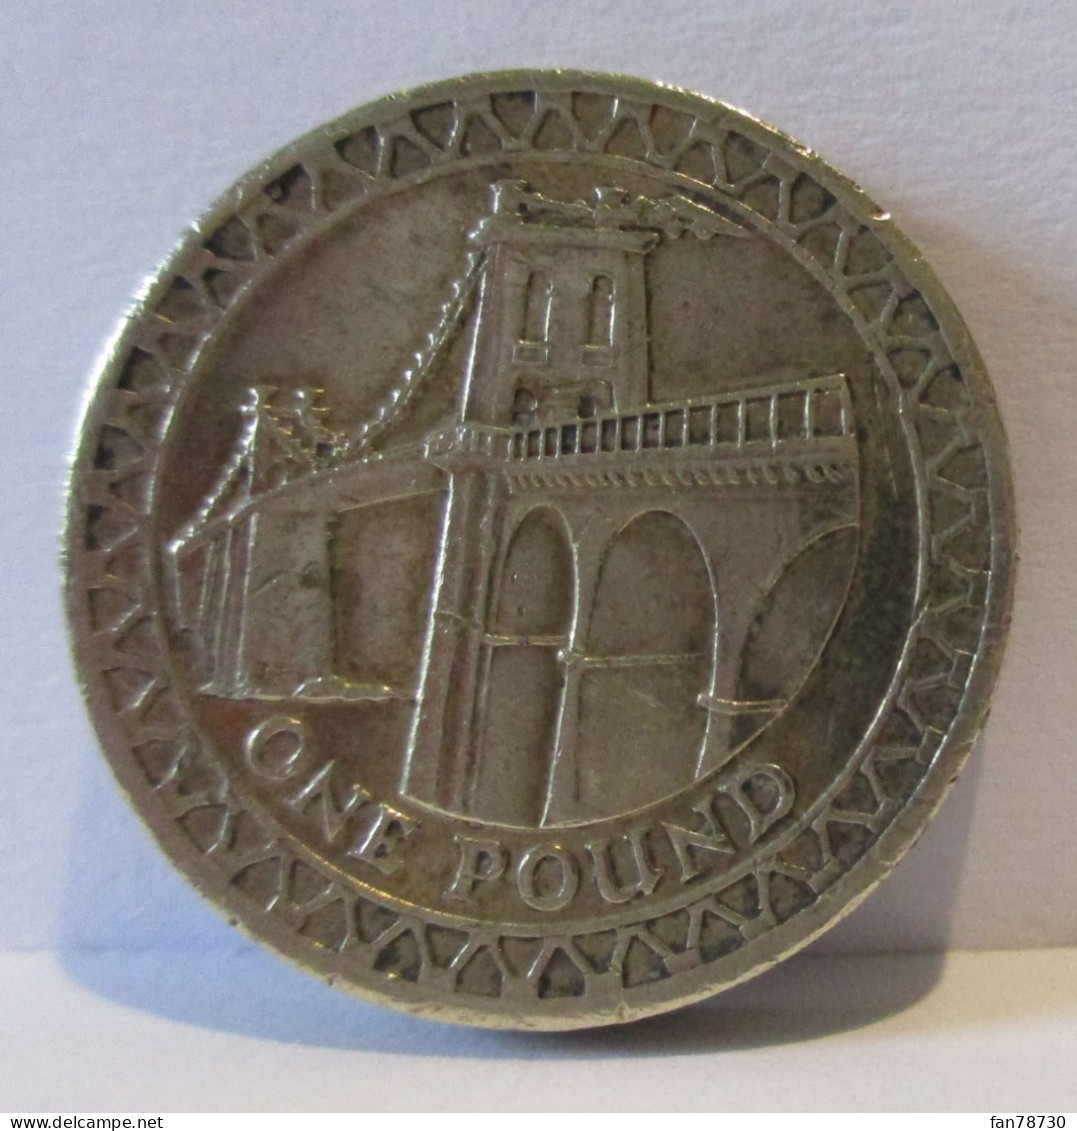 Grande Bretagne - 1 Livre - 2005 - Elizabeth II (4è Effigie) Pont Suspendu De Menai Pays De Galles - 1 Pound